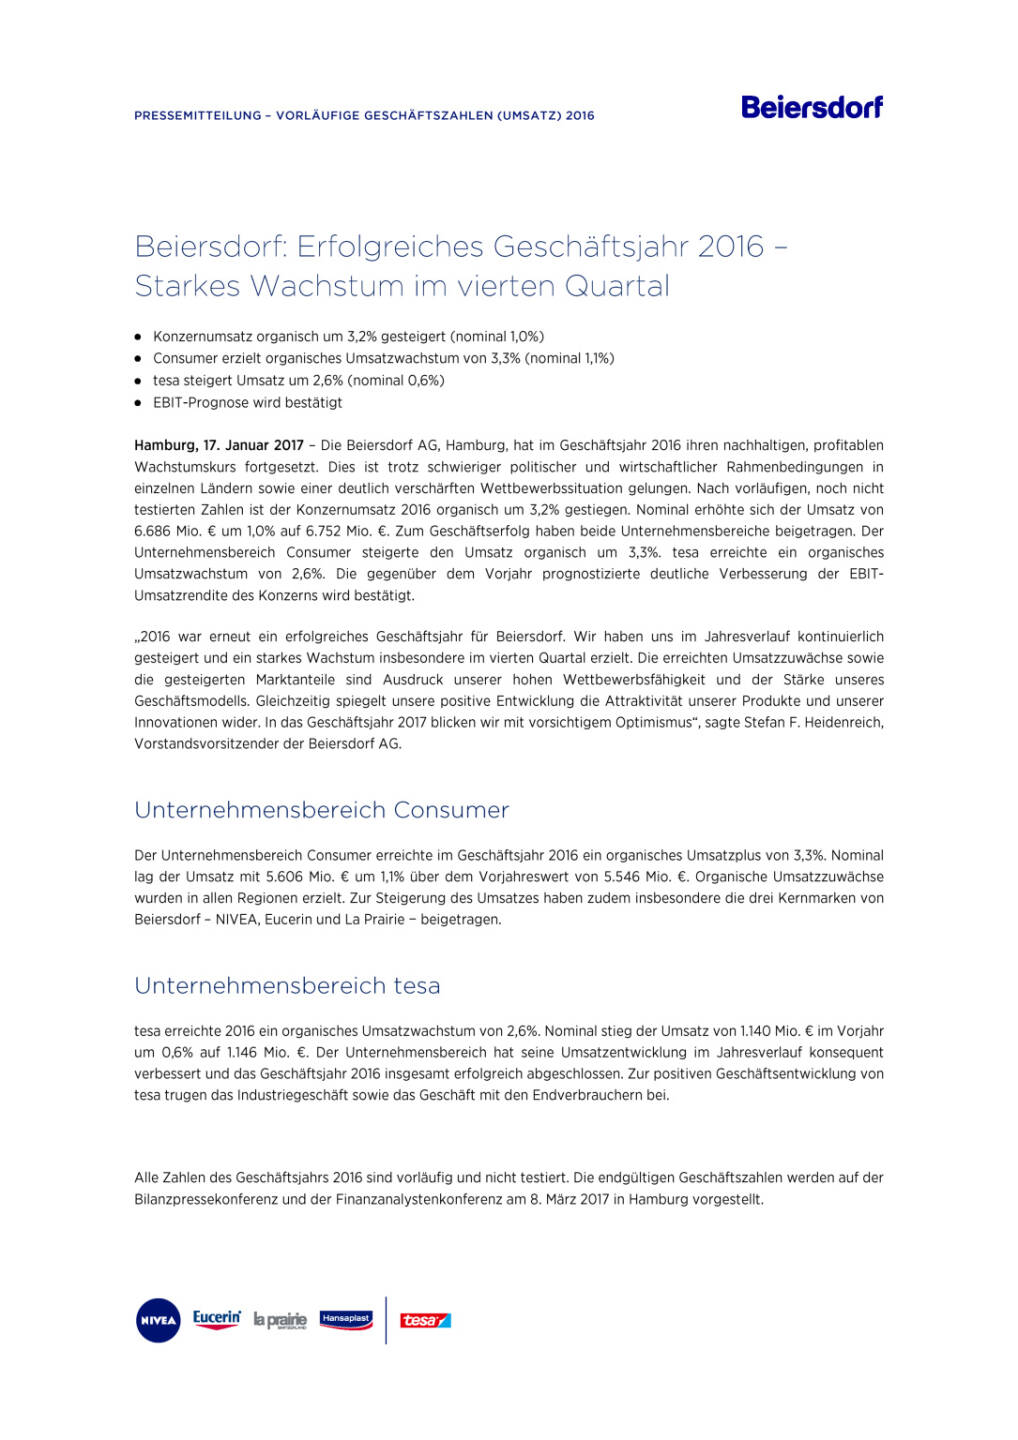 Beiersdorf: Geschäftsjahr 2016, Seite 1/3, komplettes Dokument unter http://boerse-social.com/static/uploads/file_2063_beiersdorf_geschaftsjahr_2016.pdf